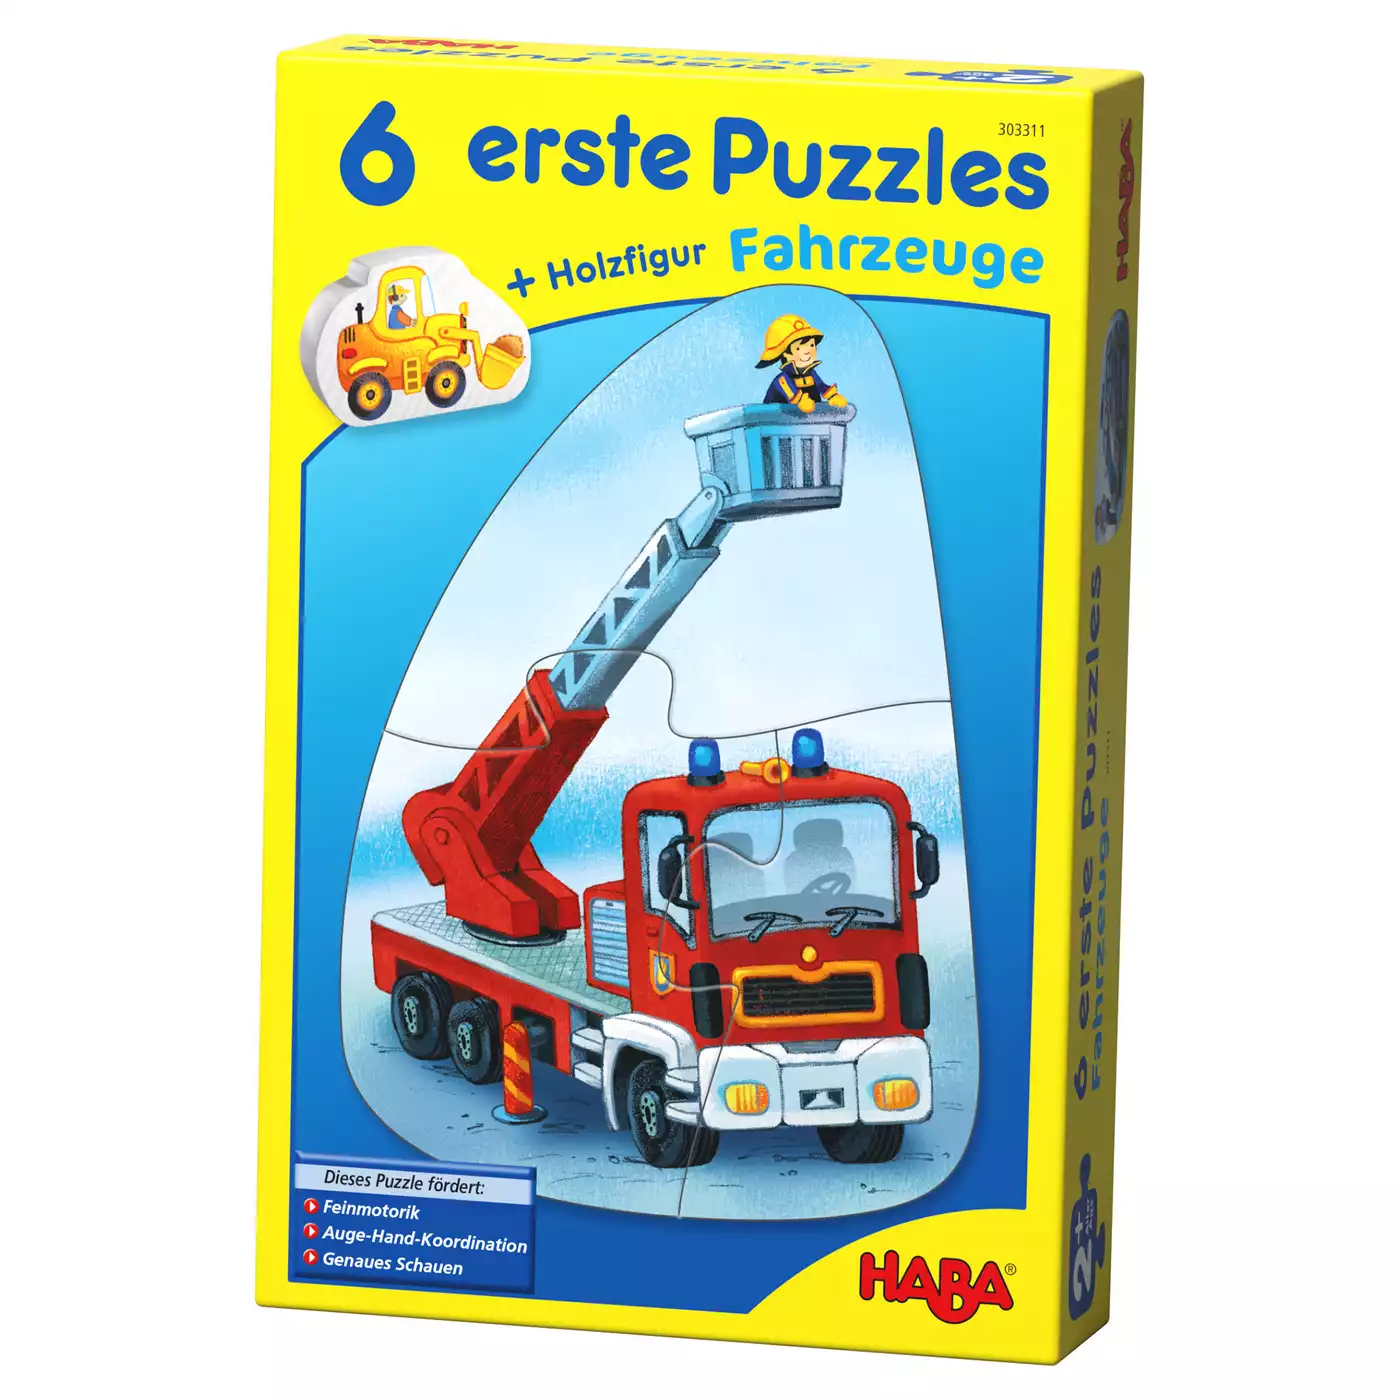 6 erste Puzzles - Fahrzeuge HABA 2000572763400 4